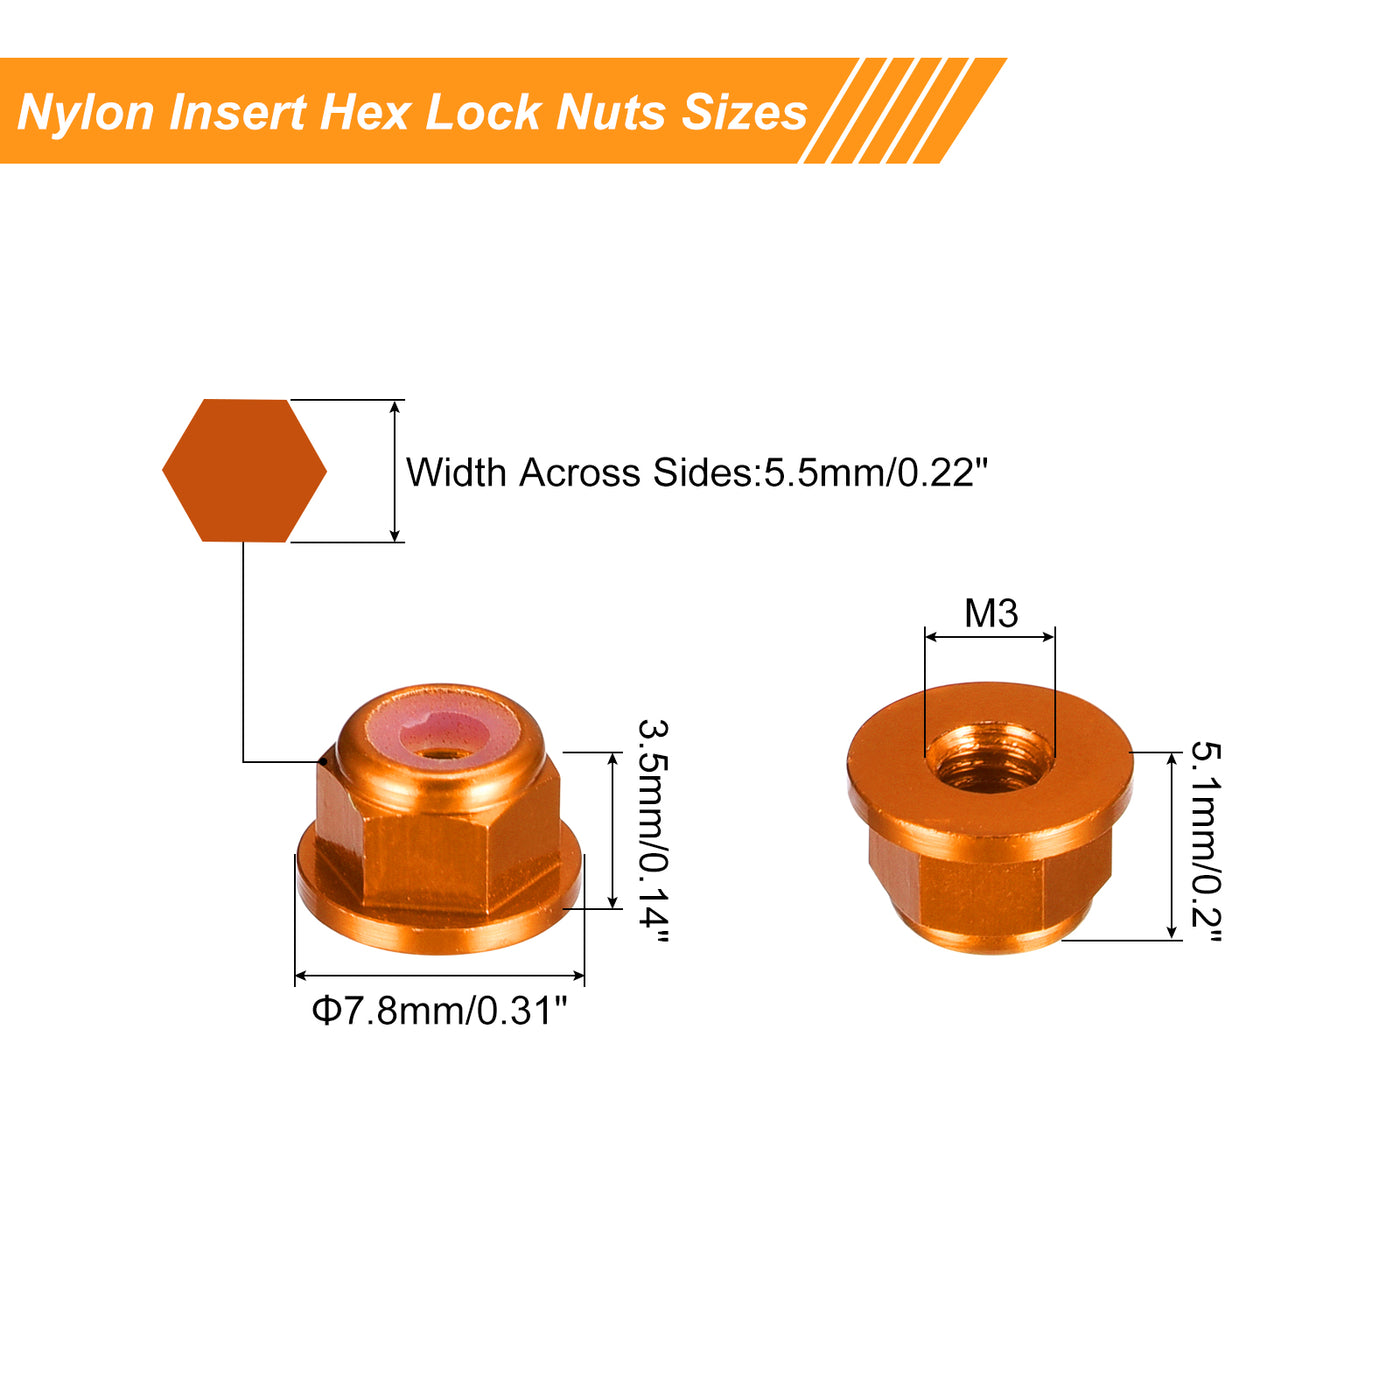 uxcell Uxcell Nylon Insert Hex Lock Nuts, 10pcs - M3 x 0.5mm Aluminum Alloy Self-Locking Nut, Anodizing Flange Lock Nut for Fasteners (Orange)